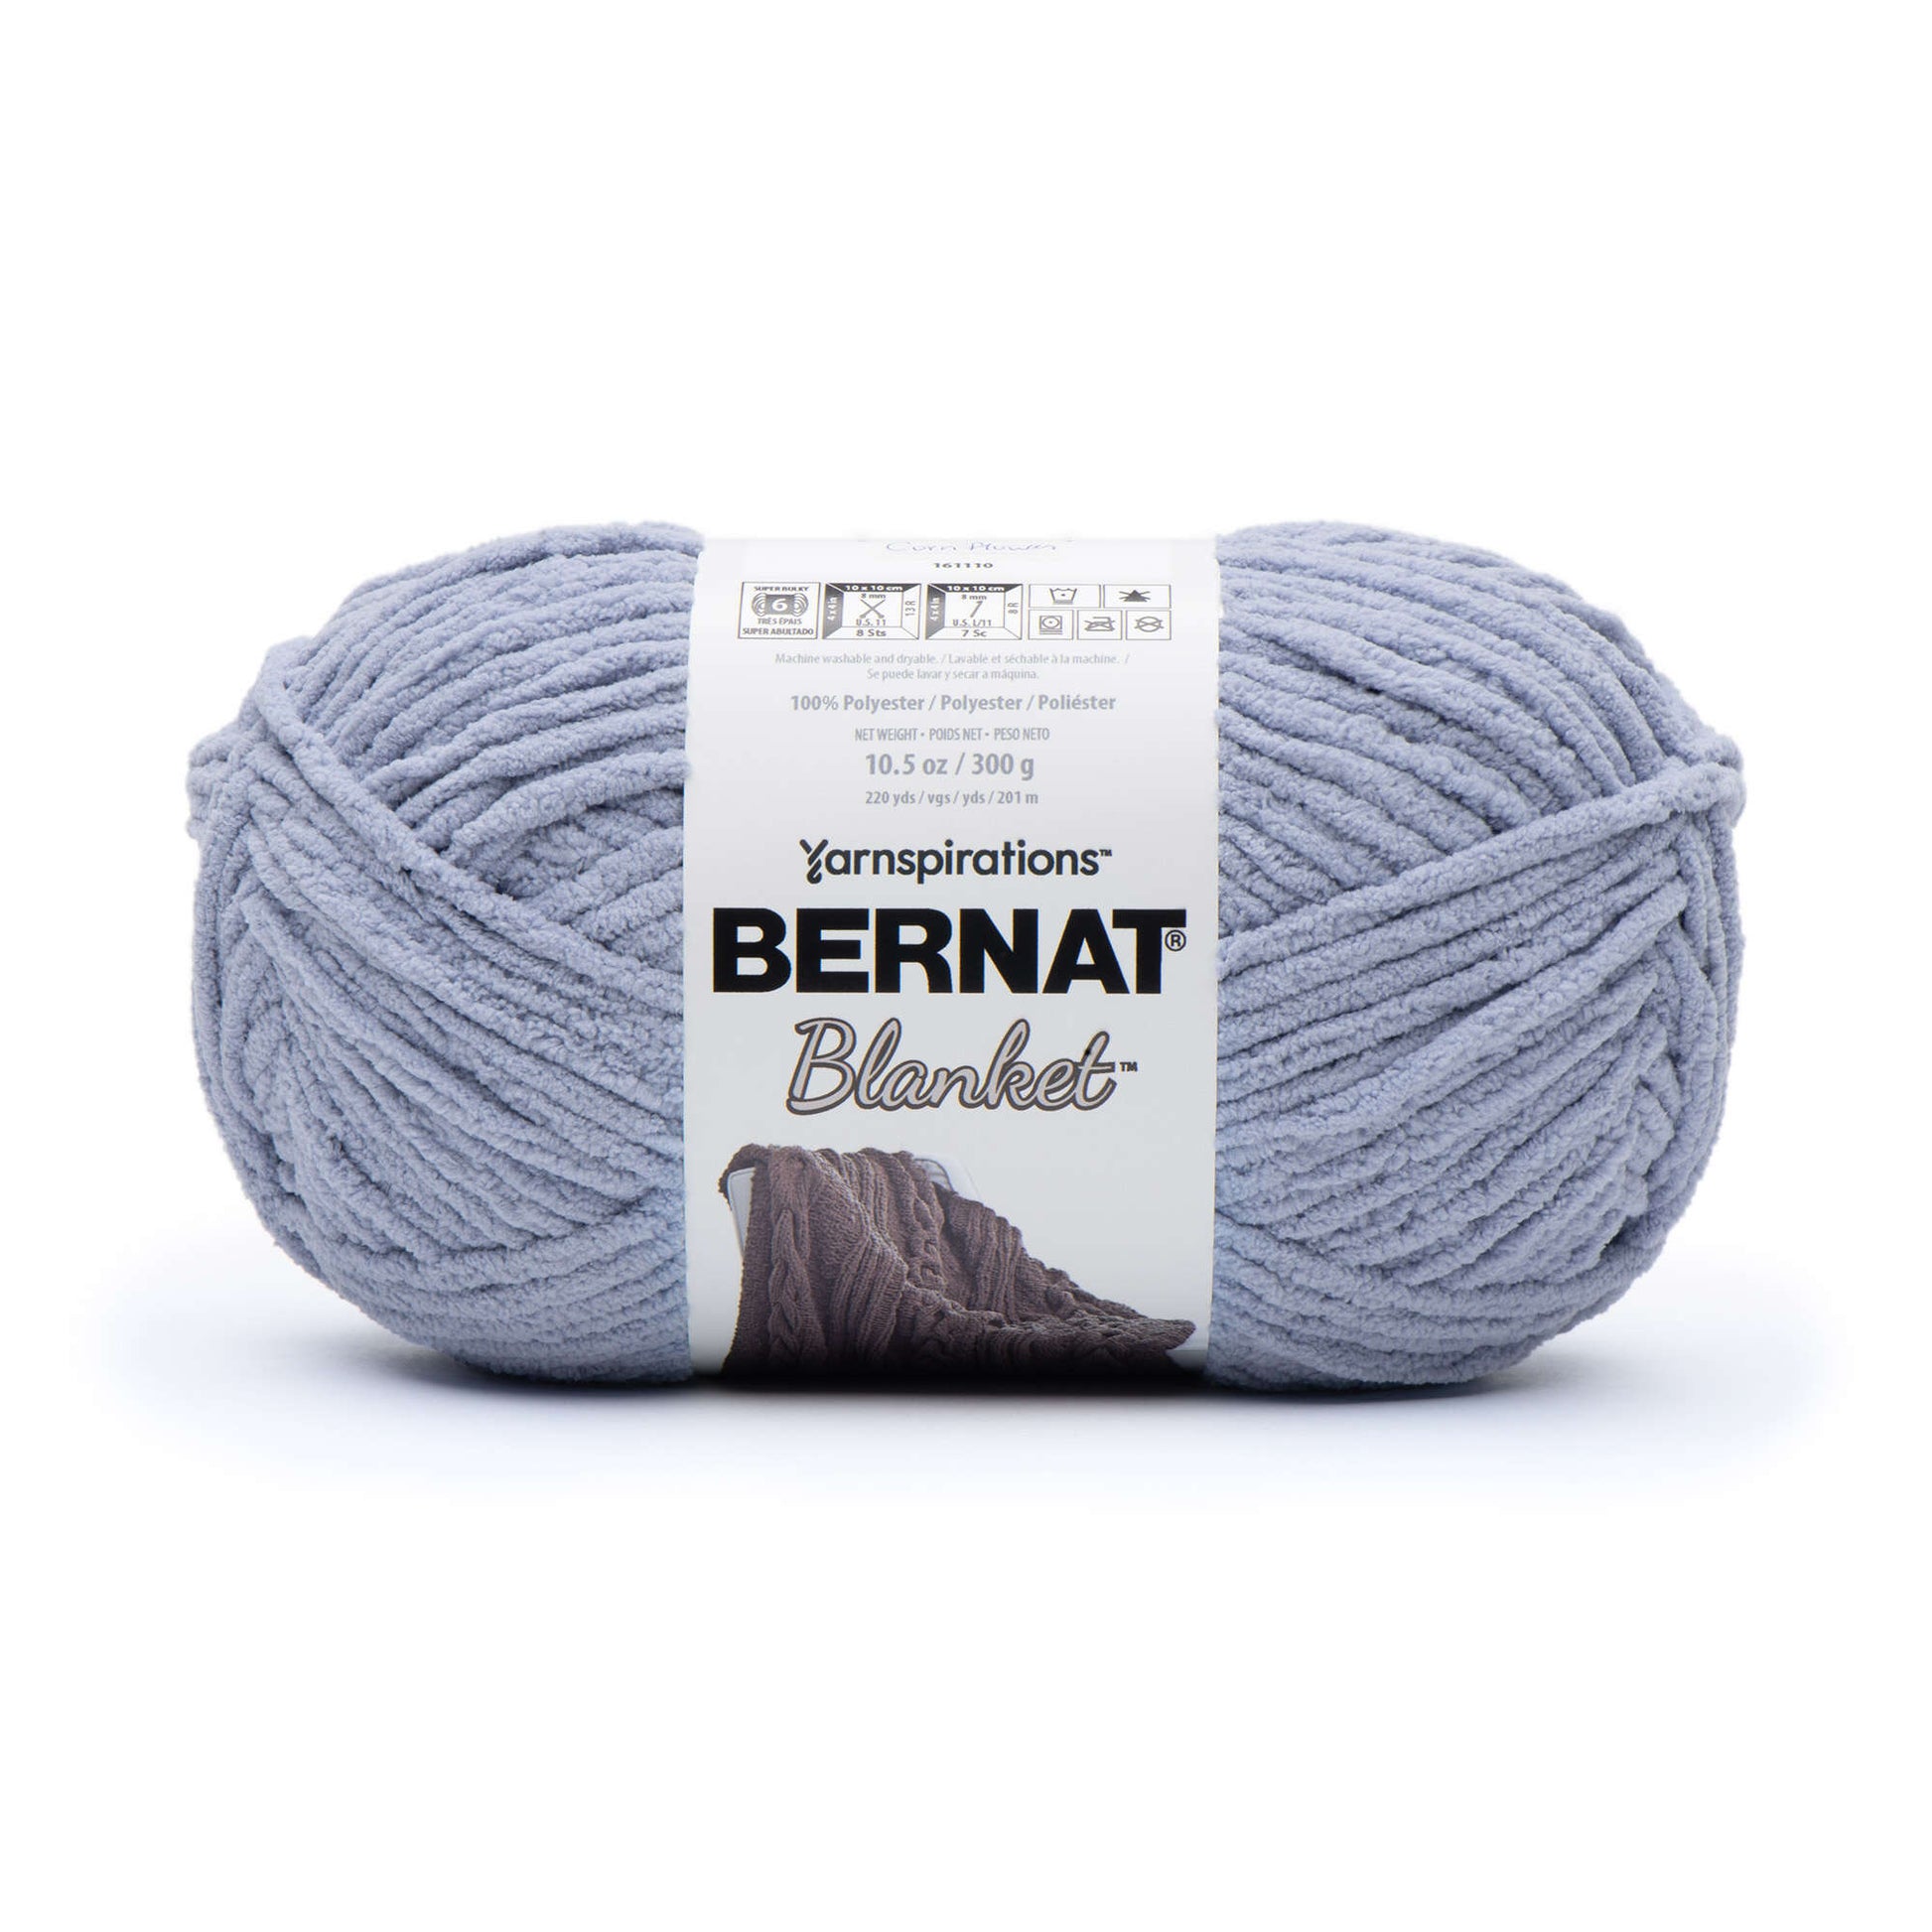 Bernat Blanket Yarn (300g/10.5oz) Cornflower